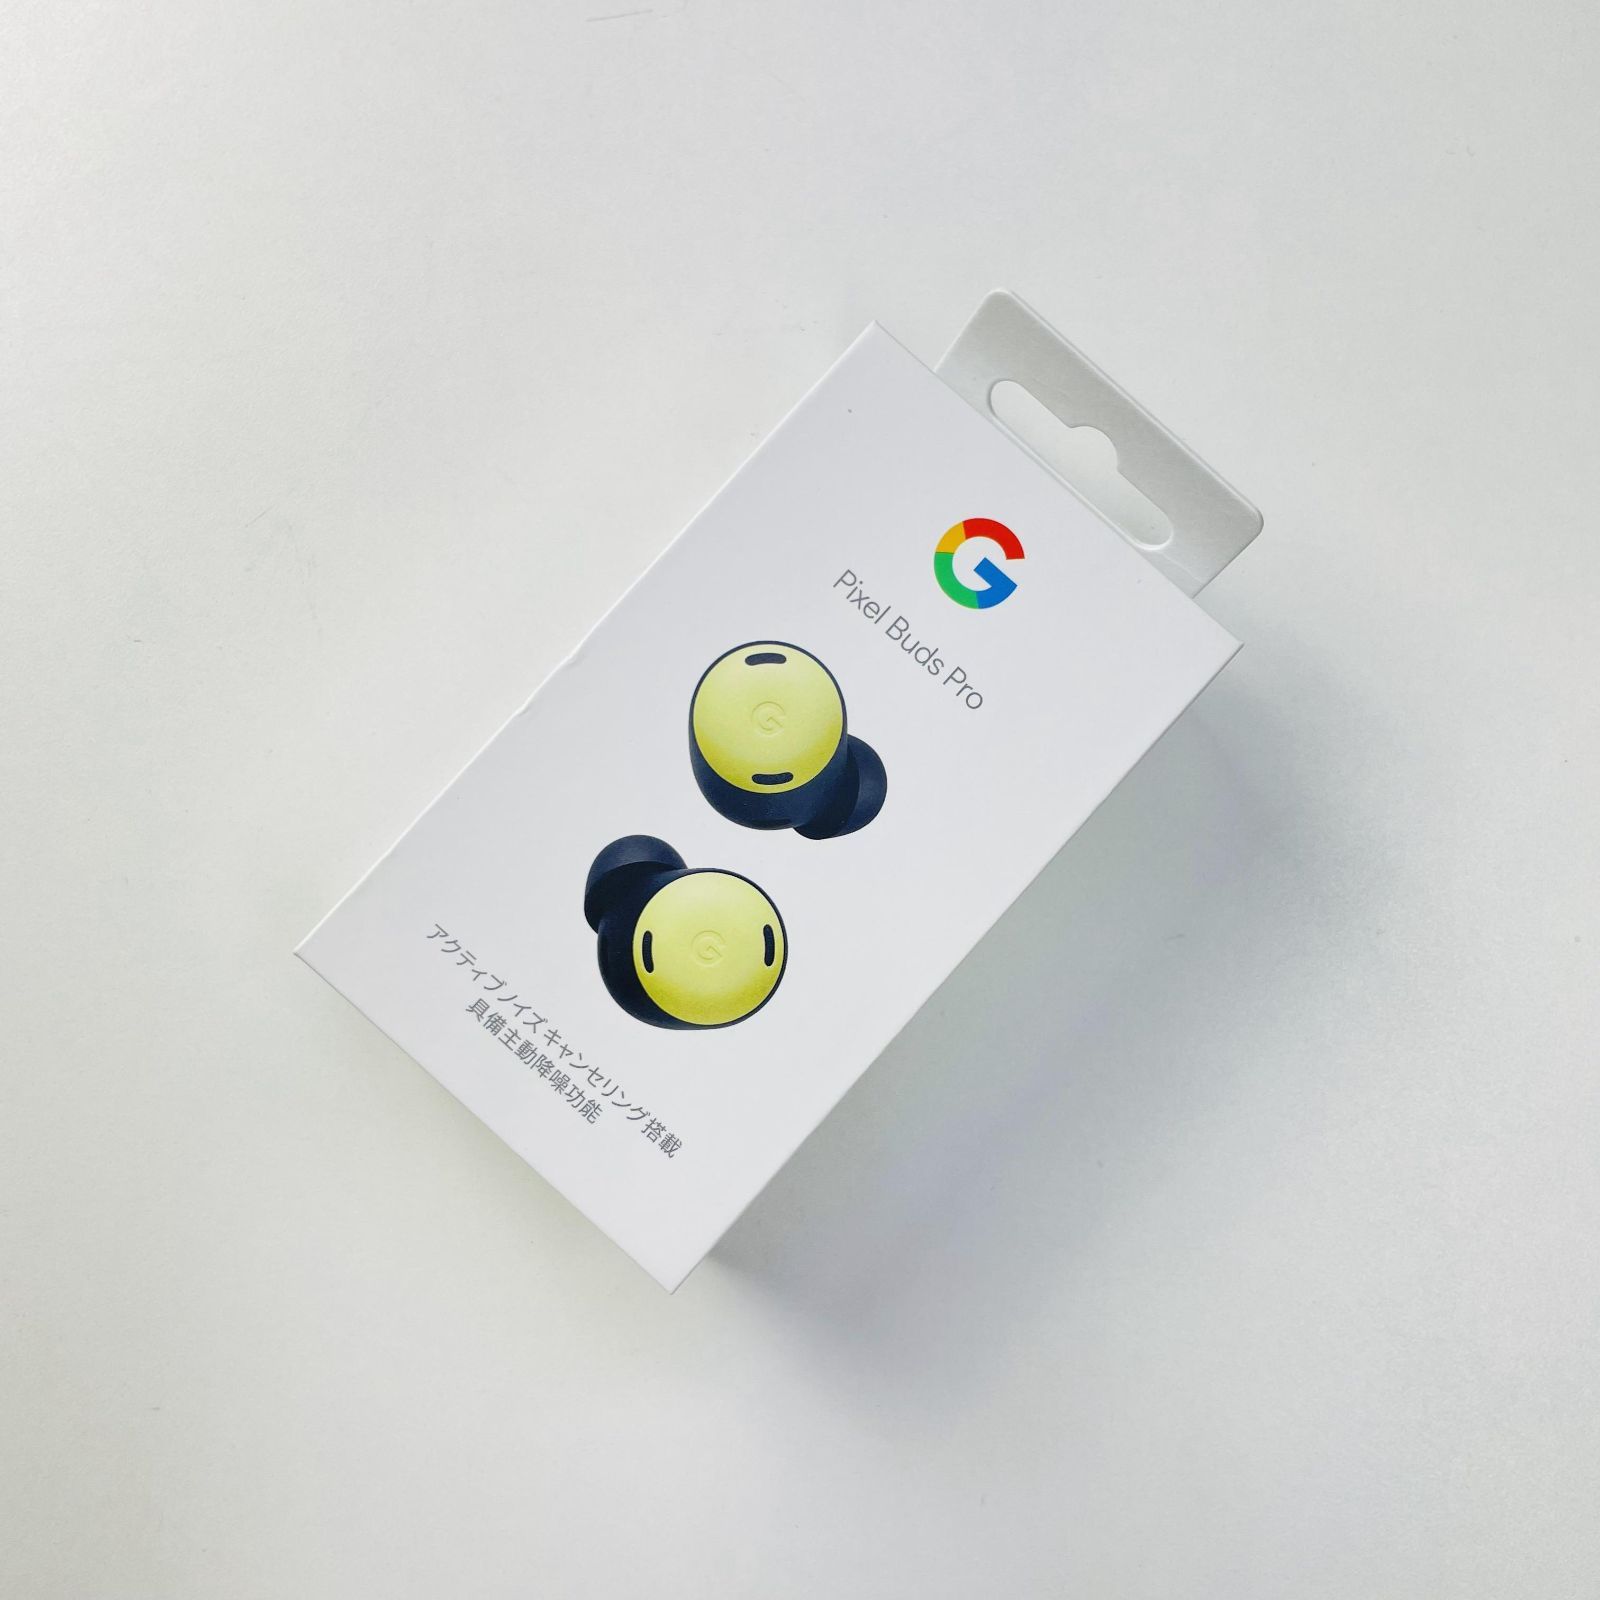 Google Pixel Buds Pro 新品未開封